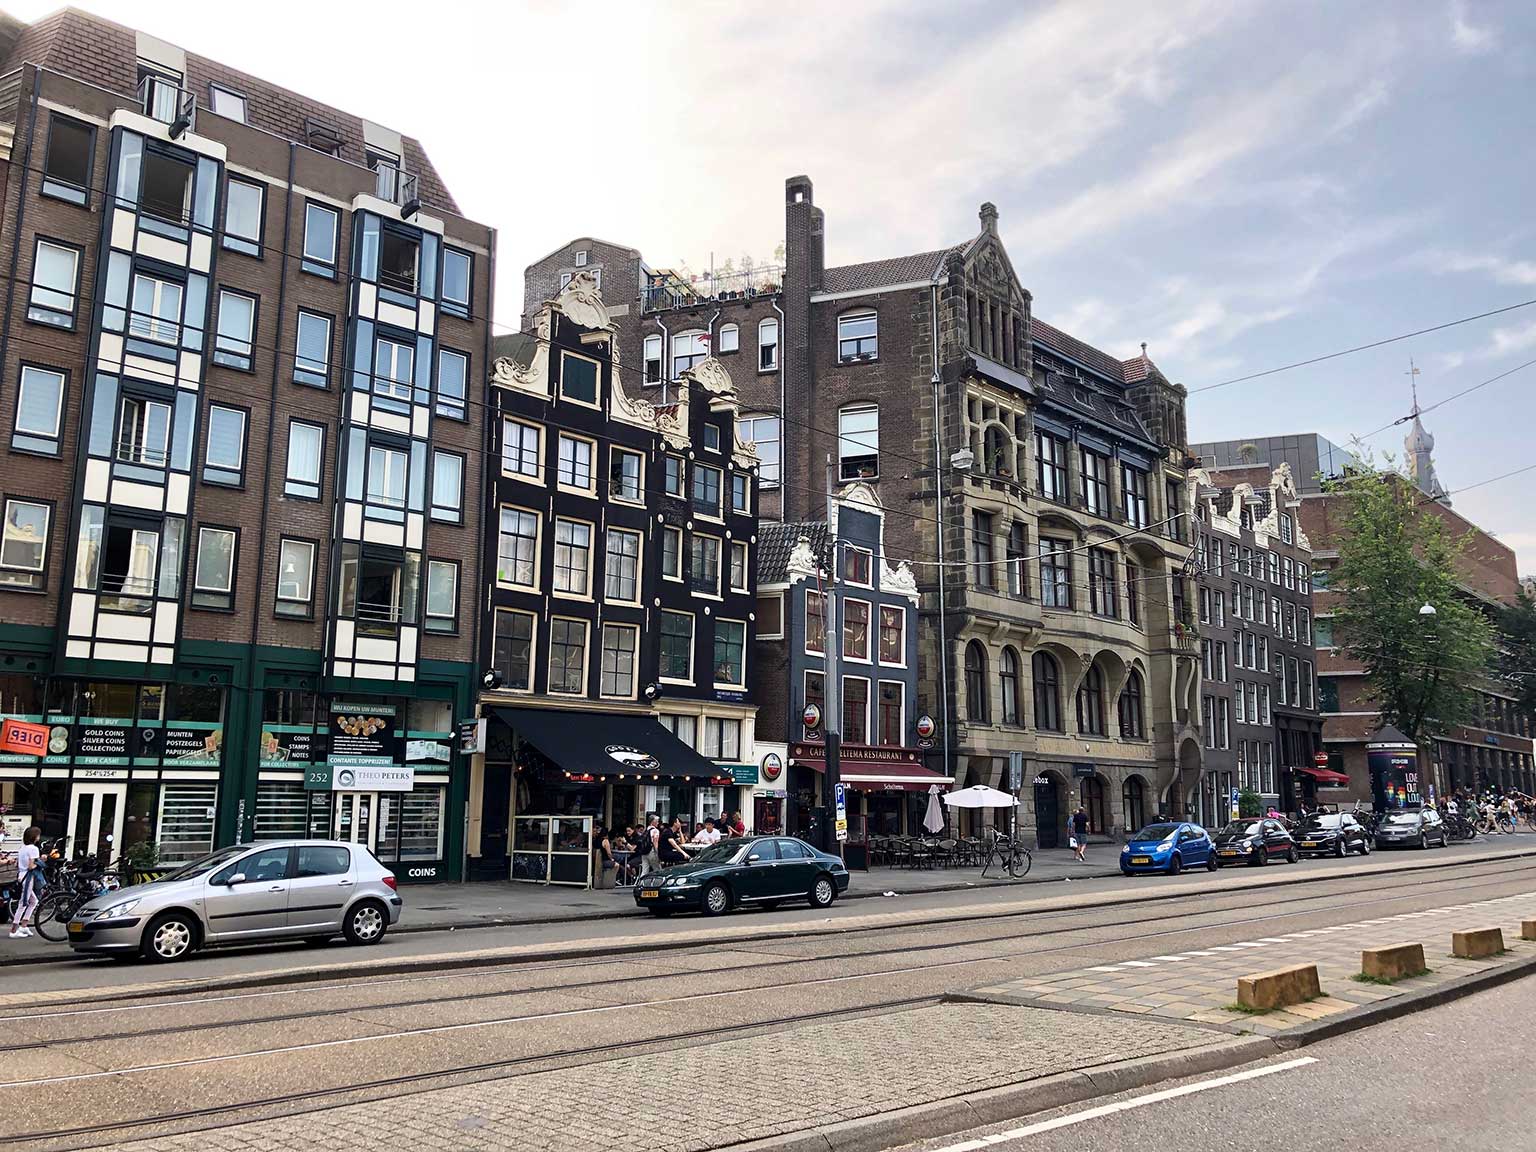 Nieuwezijds Voorburgwal, Amsterdam with Café Scheltema at number 242